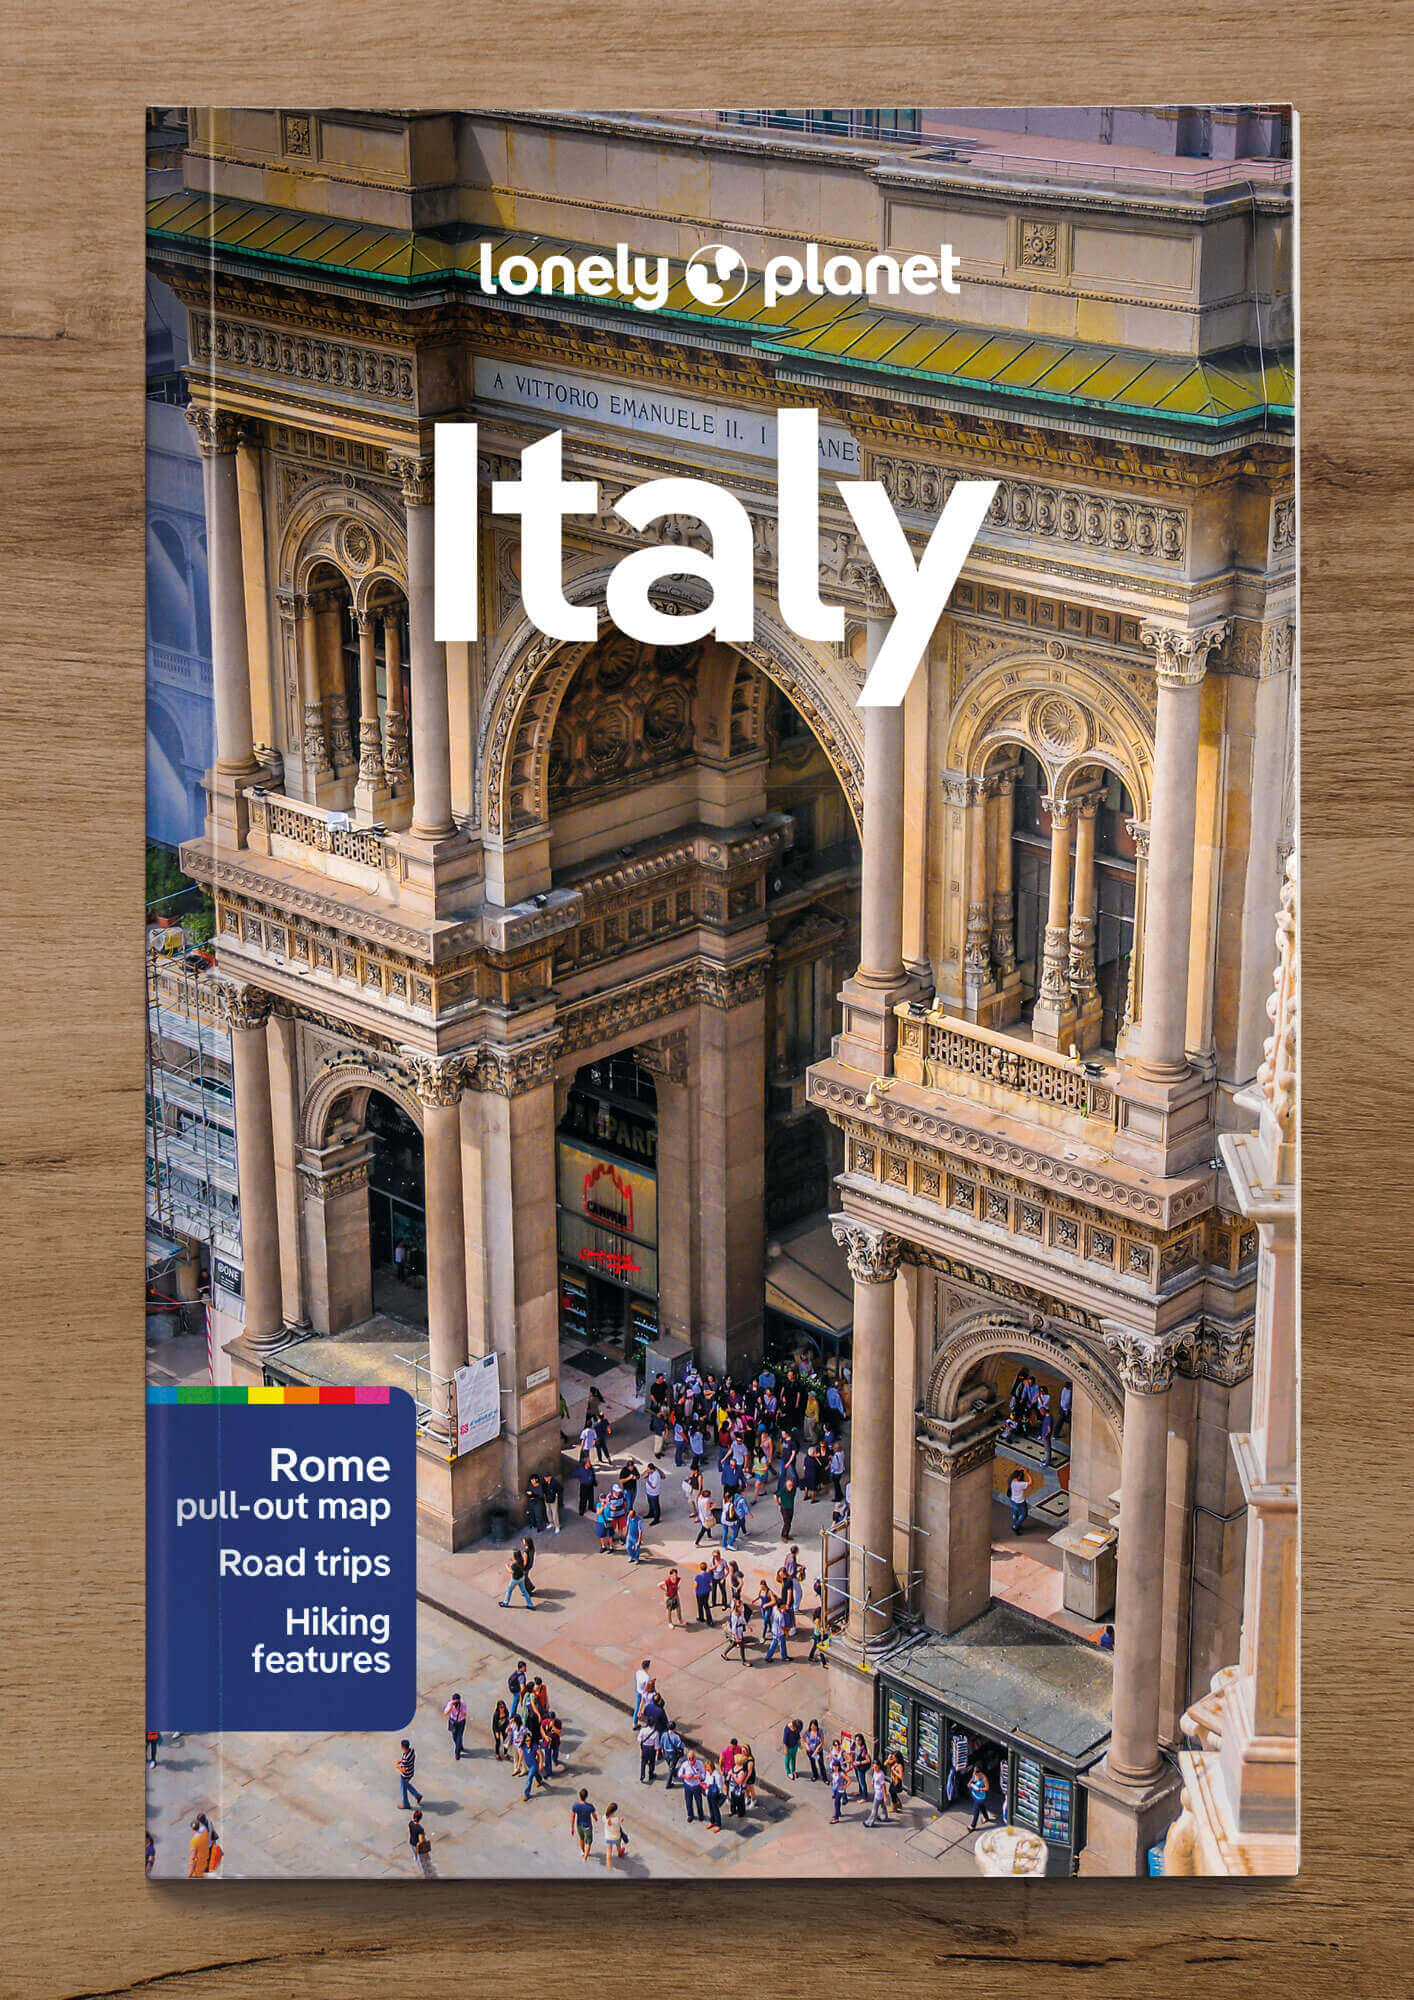  Bestselling Lonelyplanet ebook bundle - Italy